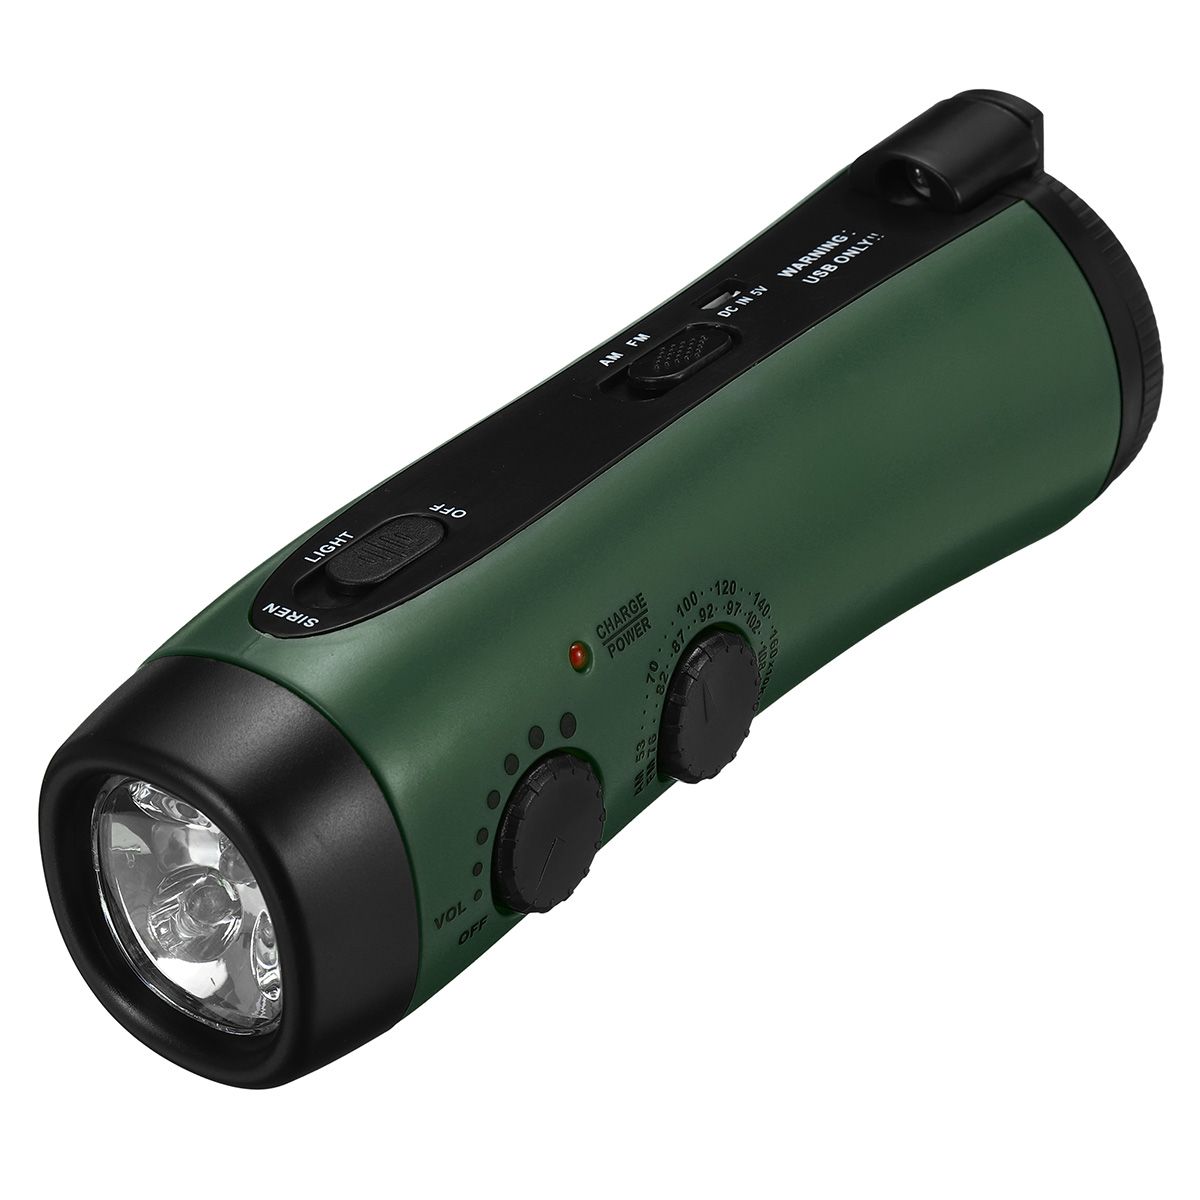 Portable-Emergency-Hand-Crank-AM-FM-WB-NOAA-Solar-Weather-Radio-with-Alarm-LED-Flashlight-Power-Bank-1688500